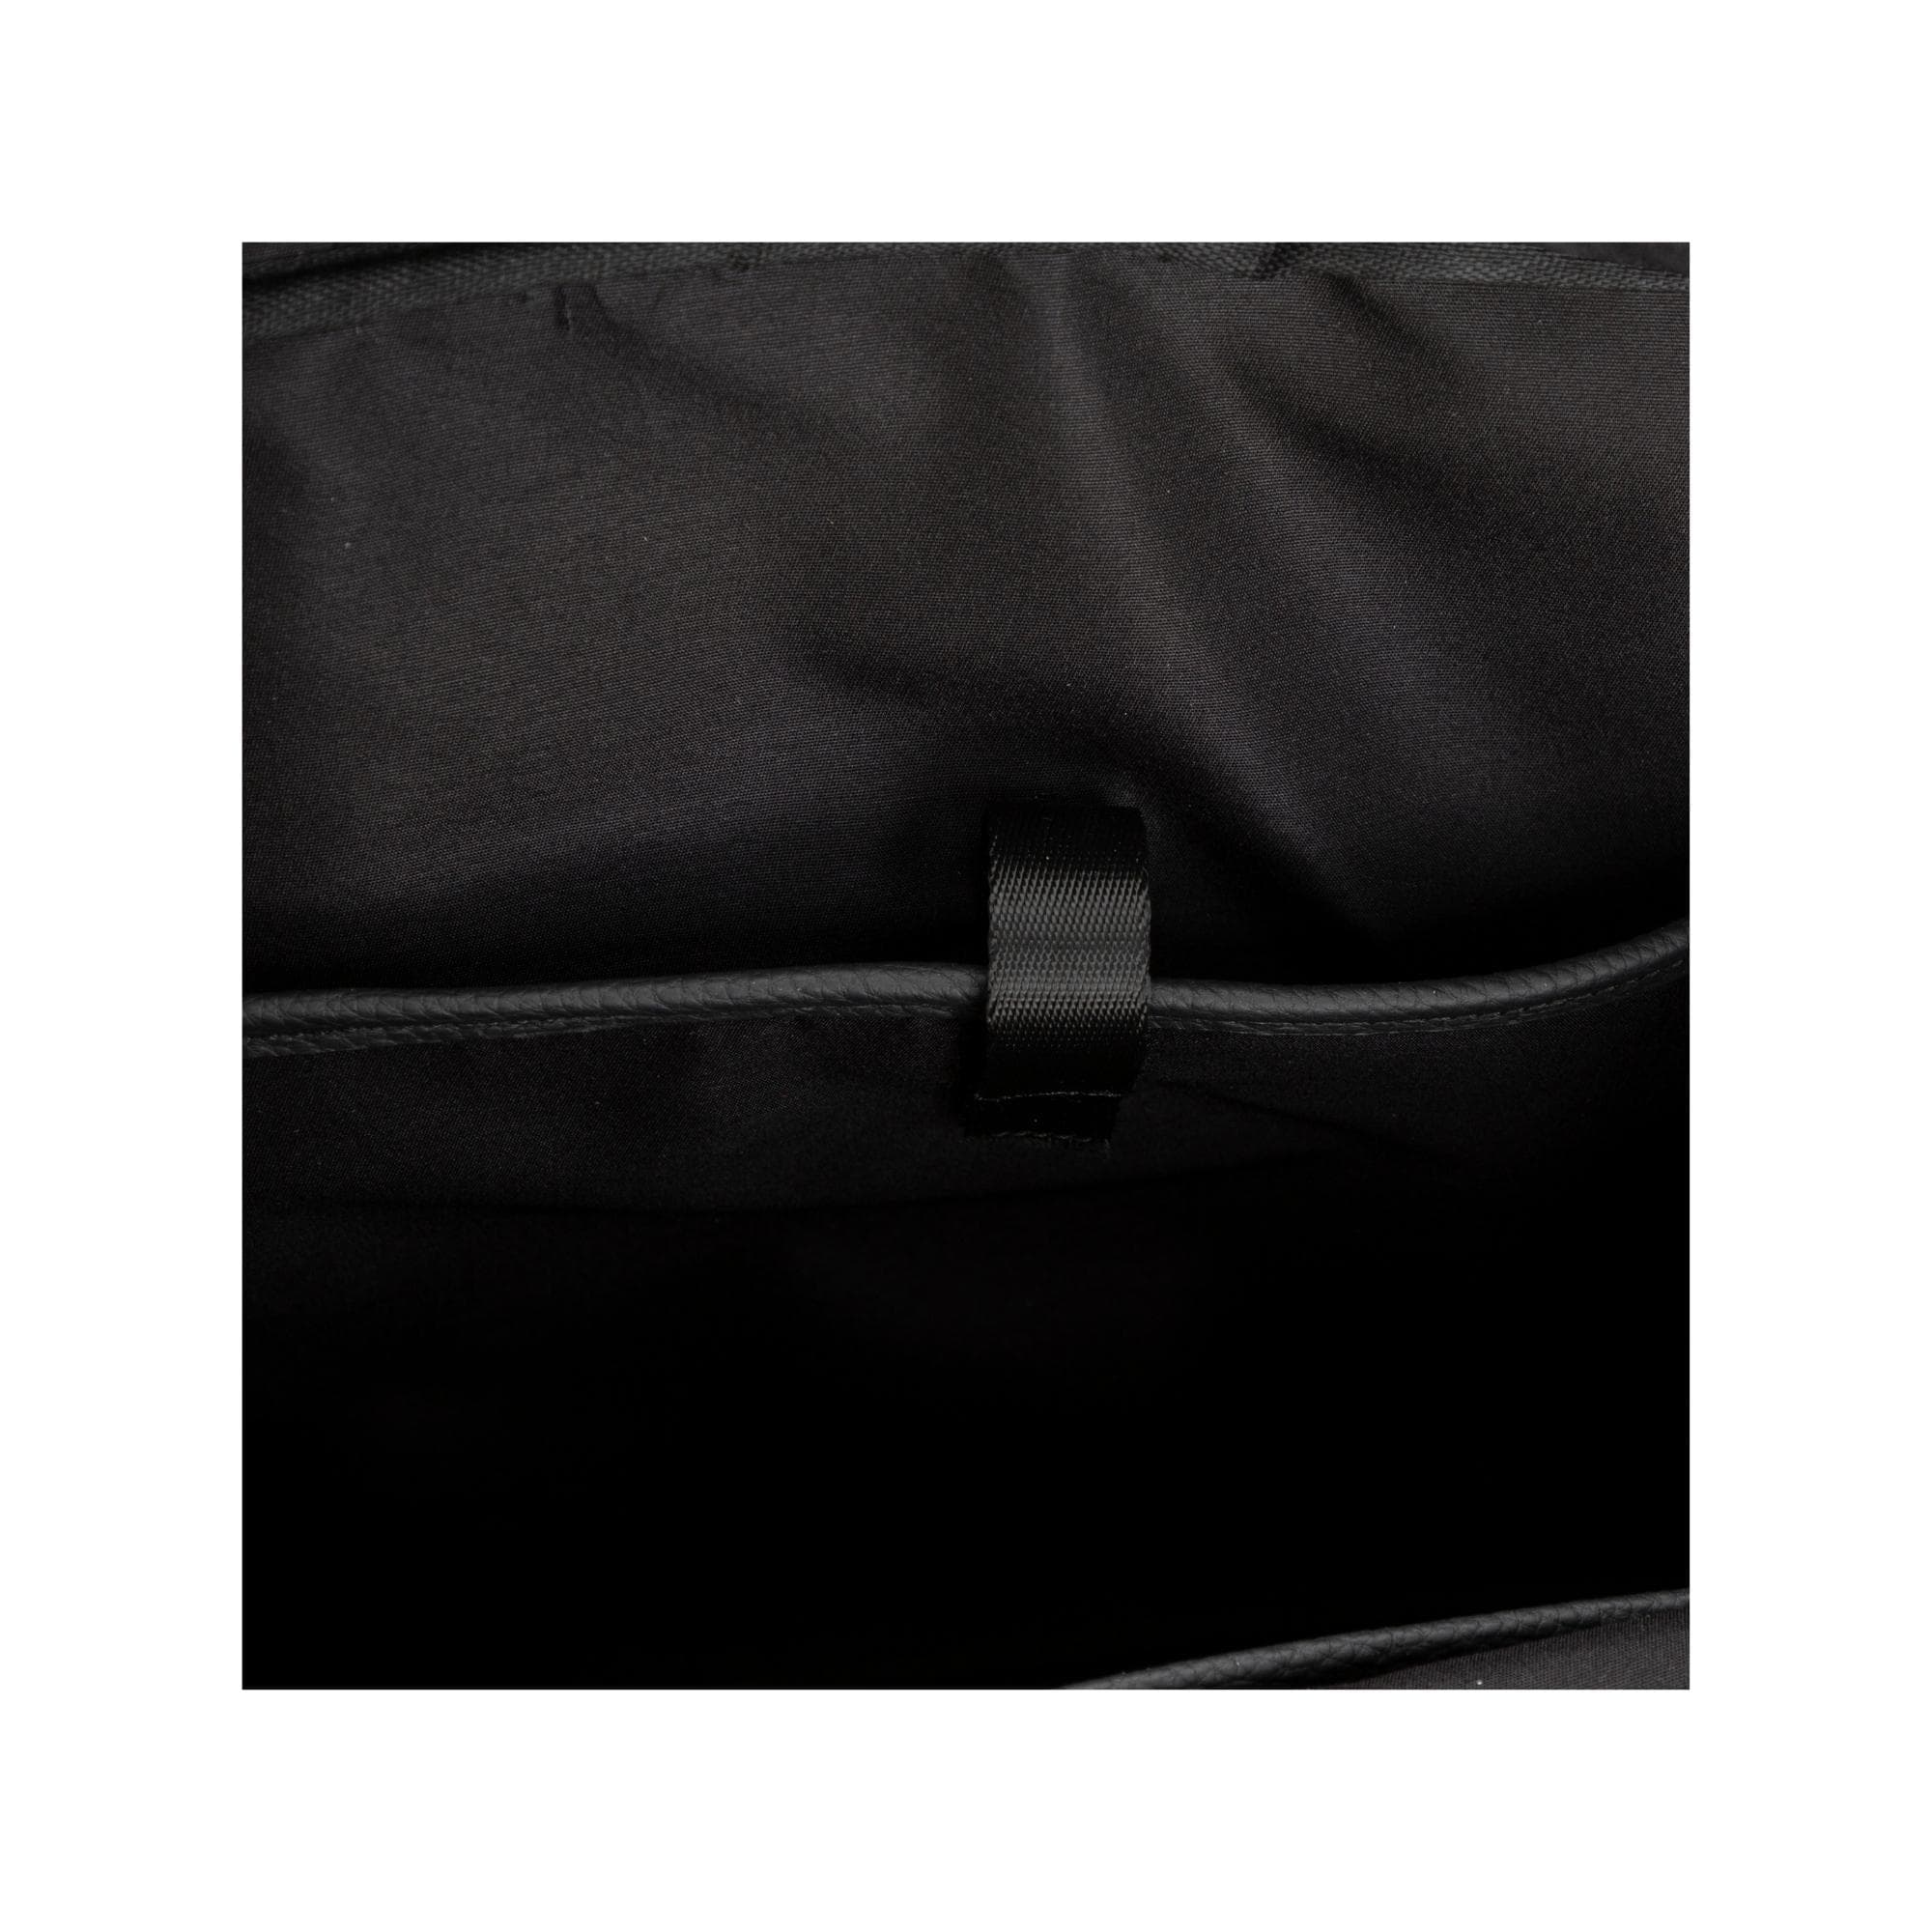 Leather Backpacks-1 Bouletta